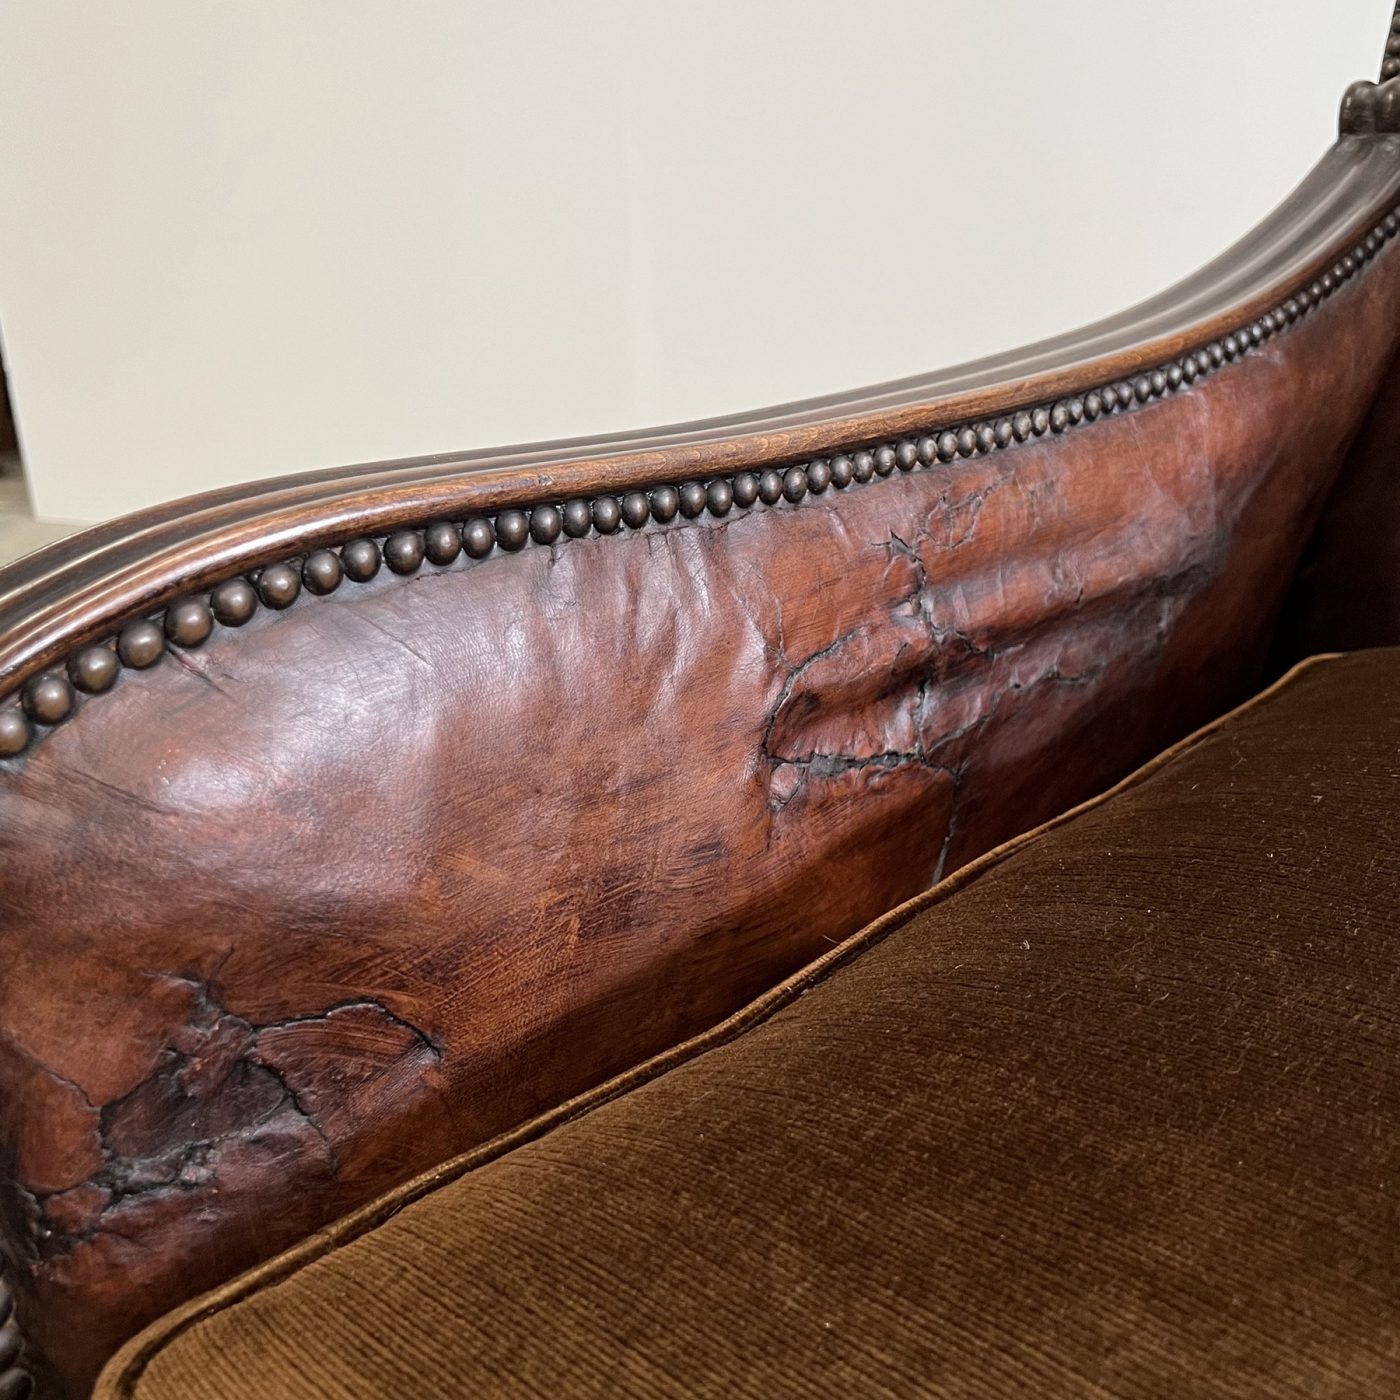 objet-vagabond-leather-armchairs0006